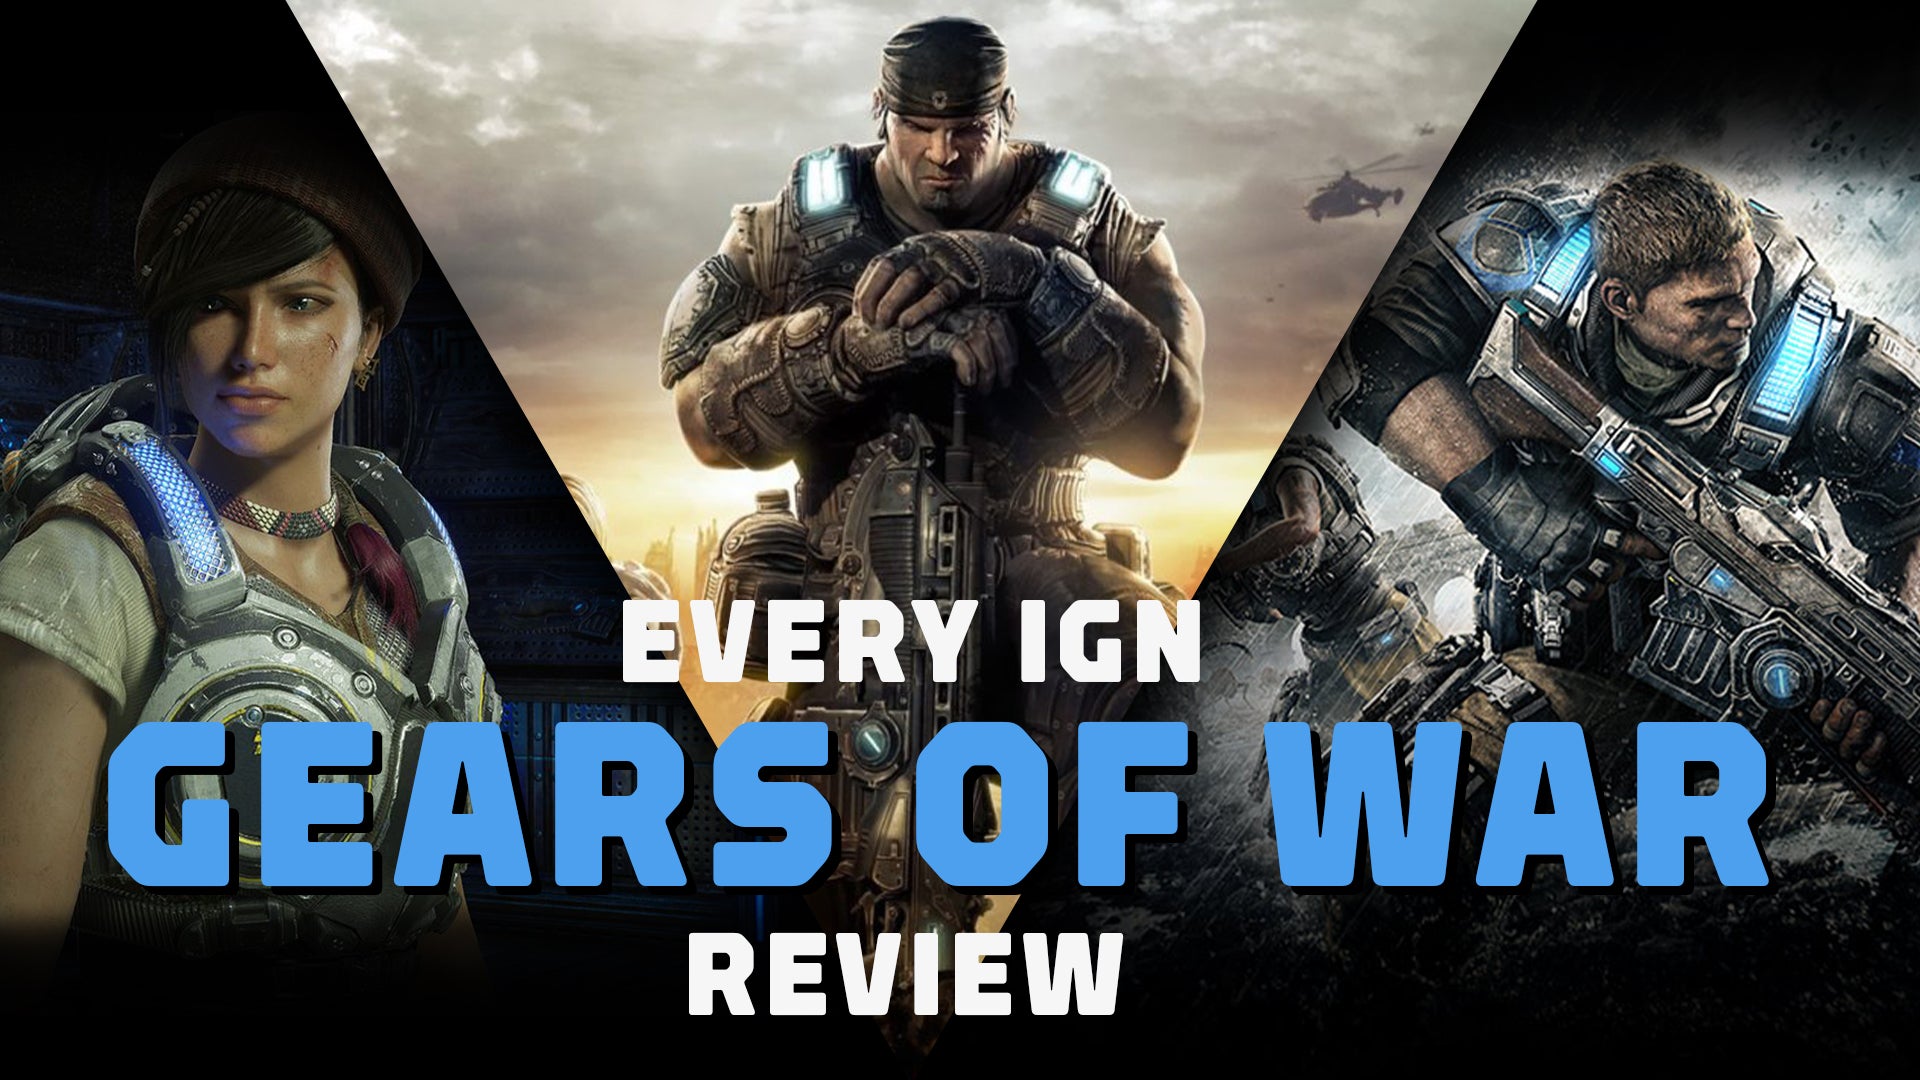 Gears of War 4 review